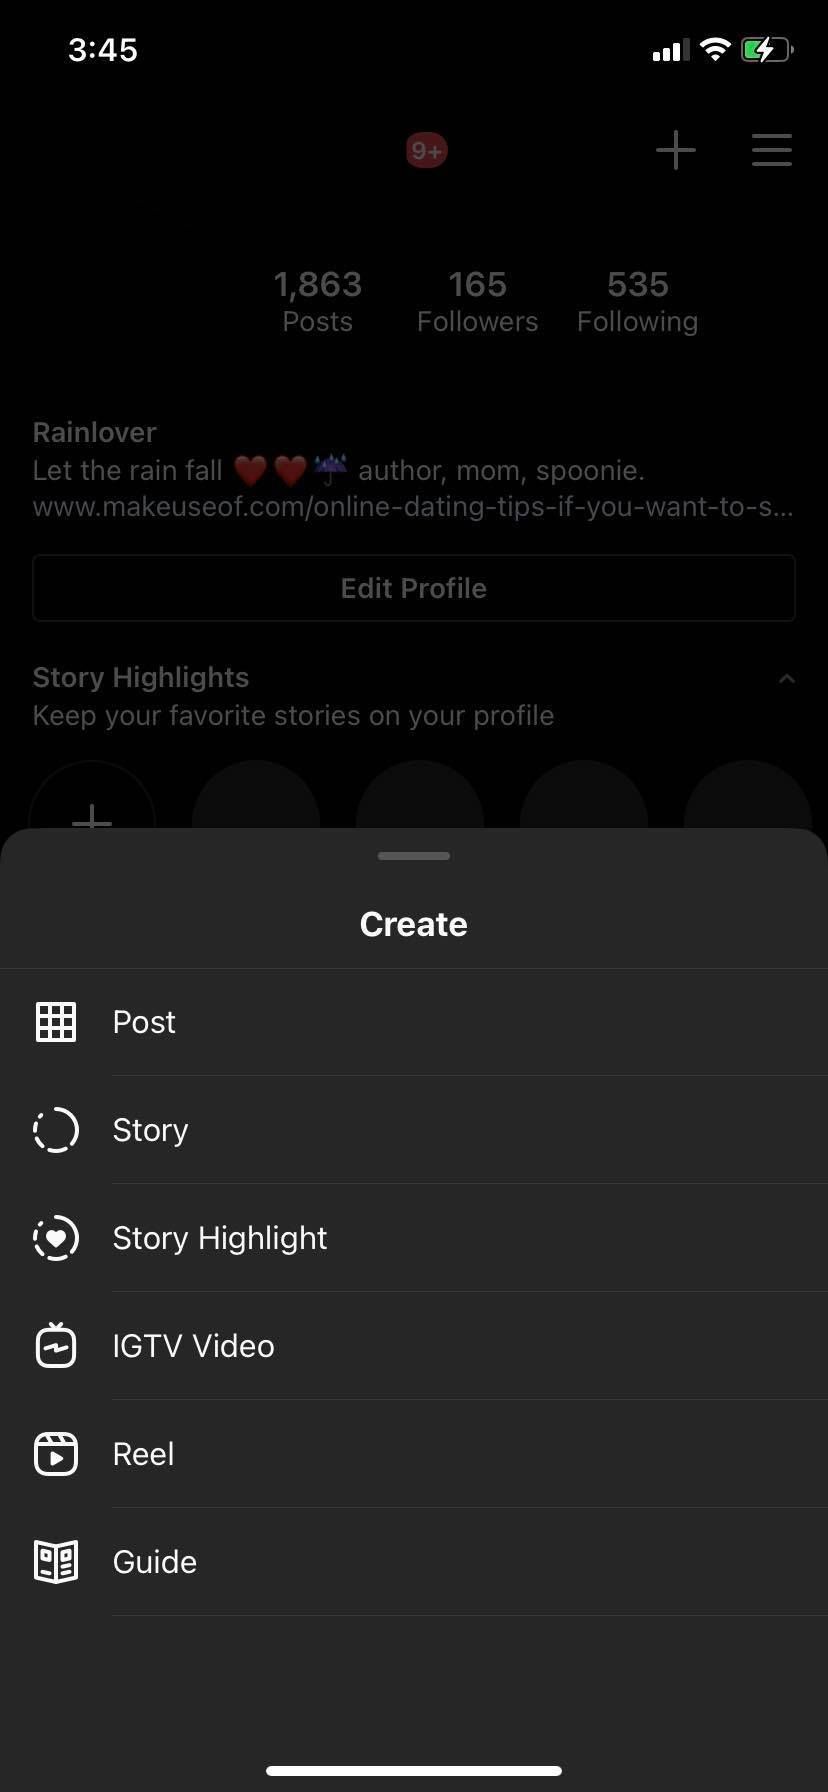 Screenshot of Instagram Create menu